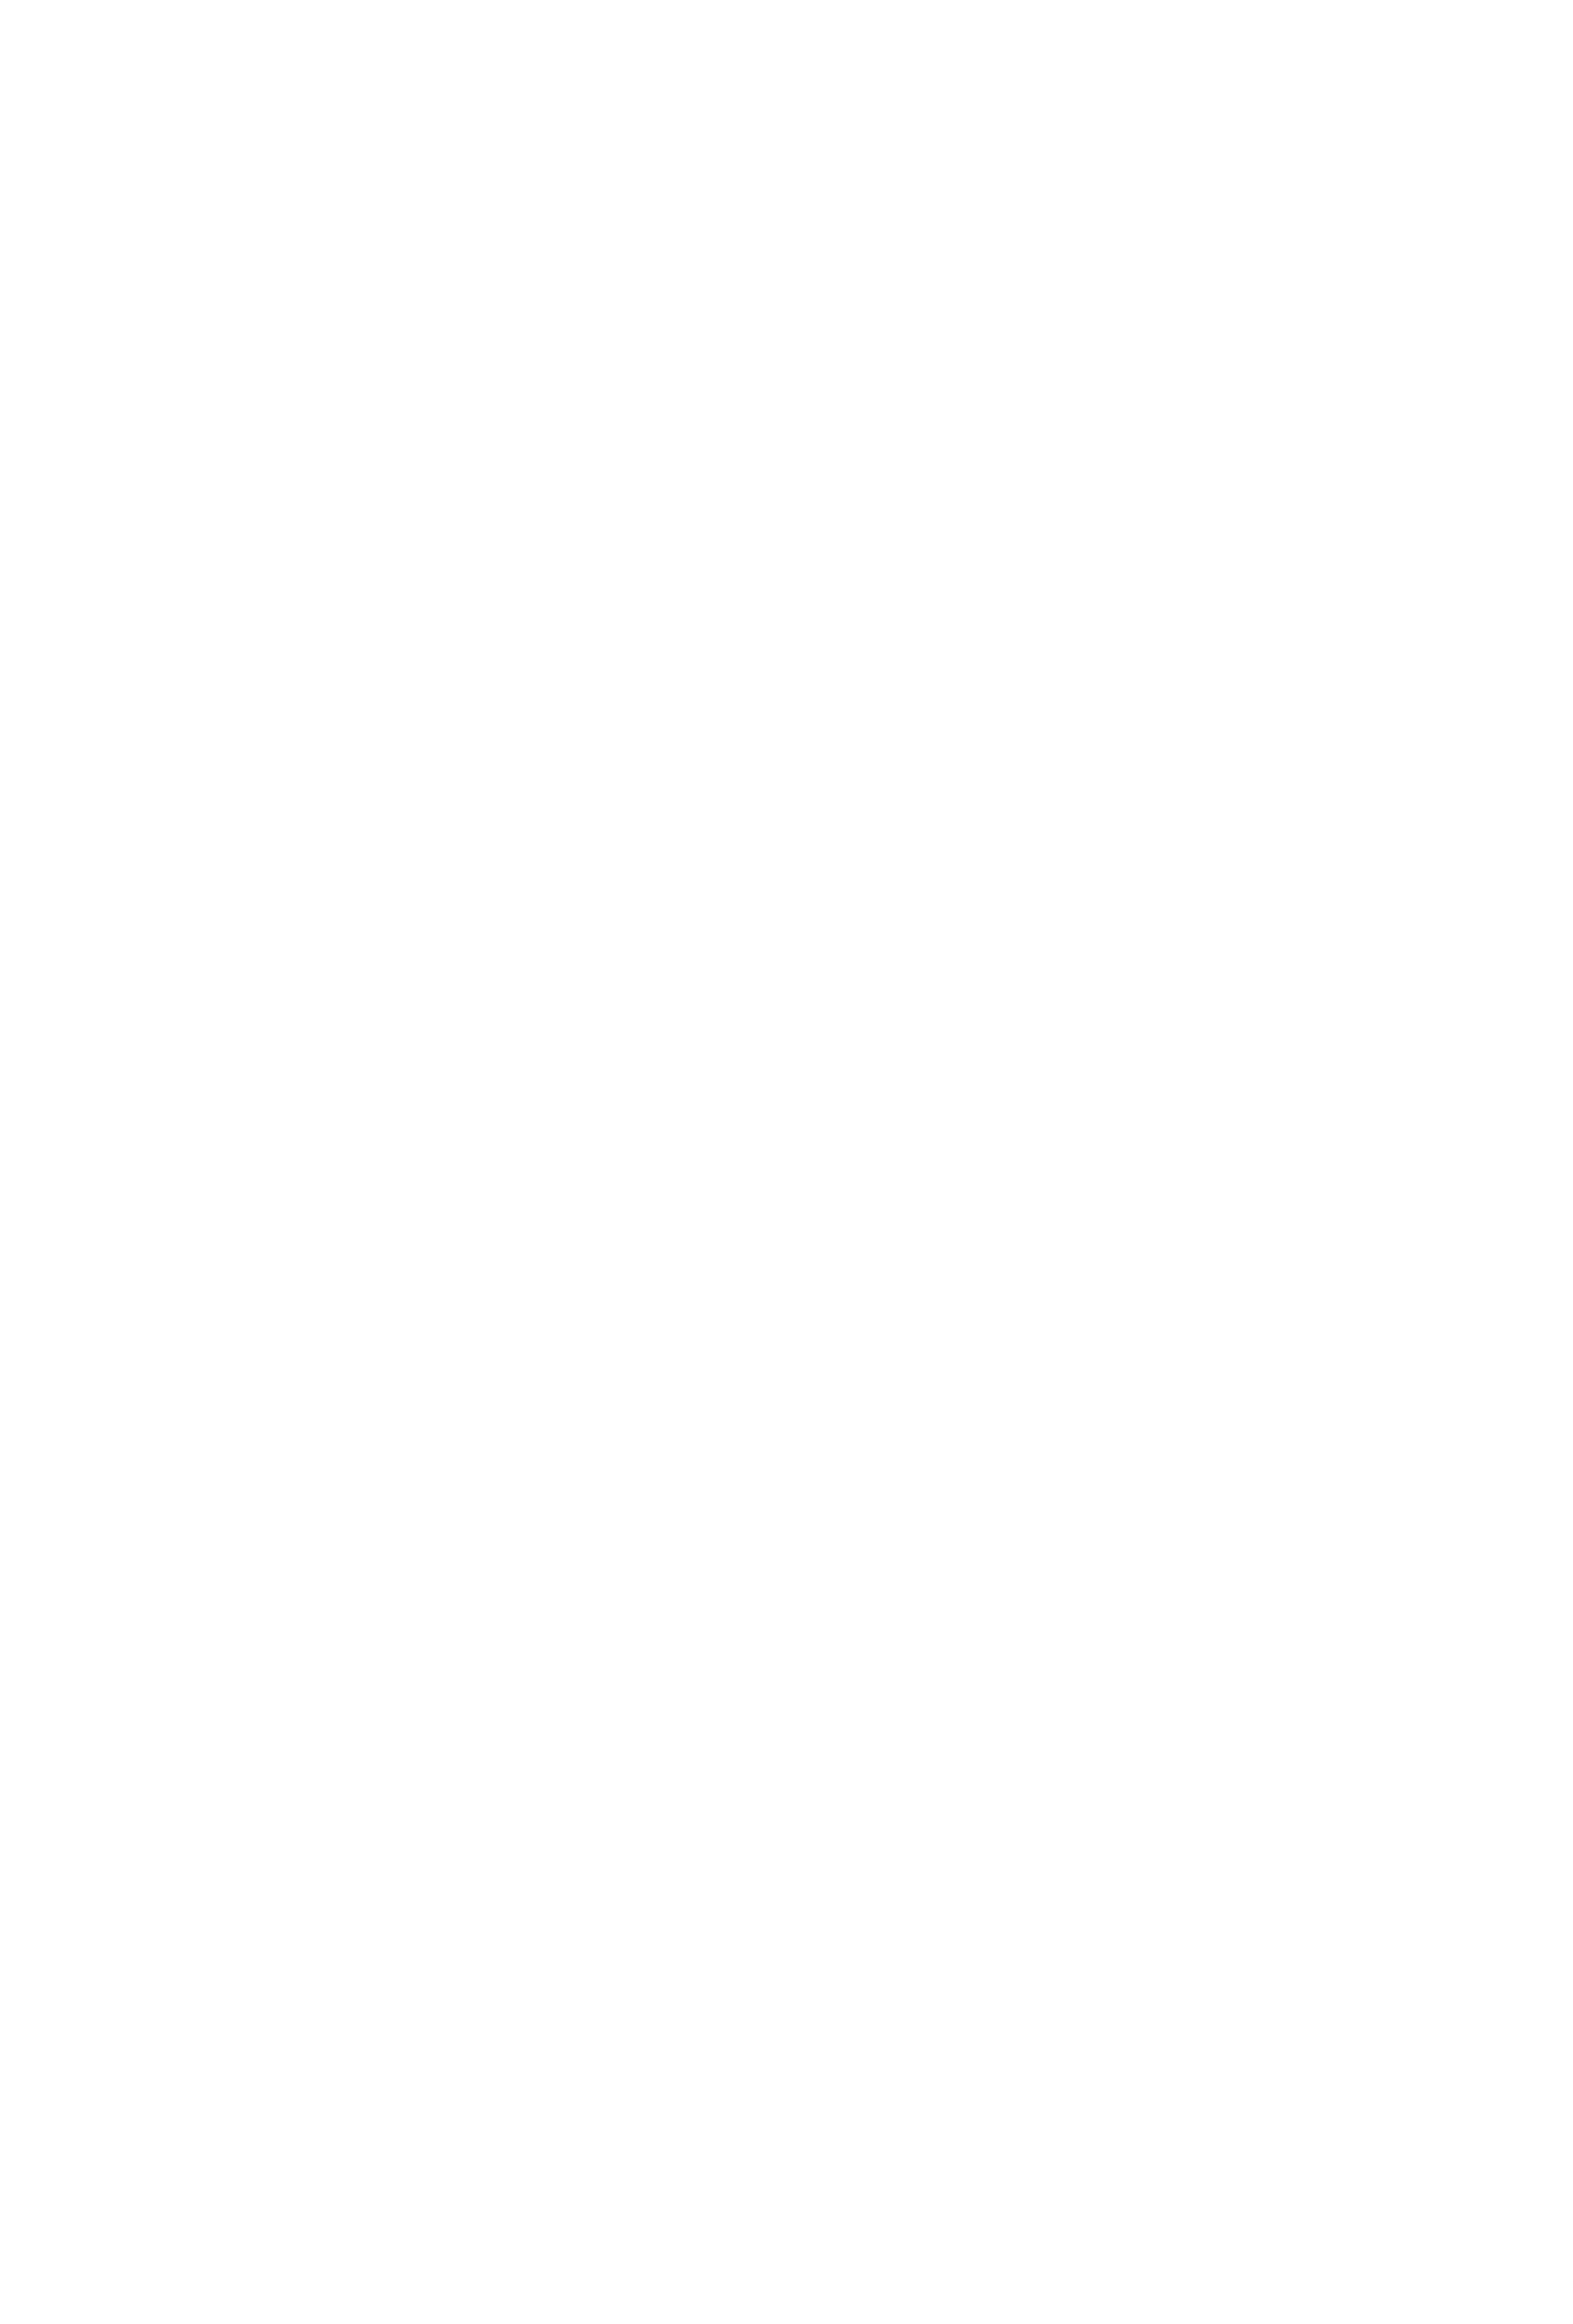 Thuisbijcarmen_Logo3